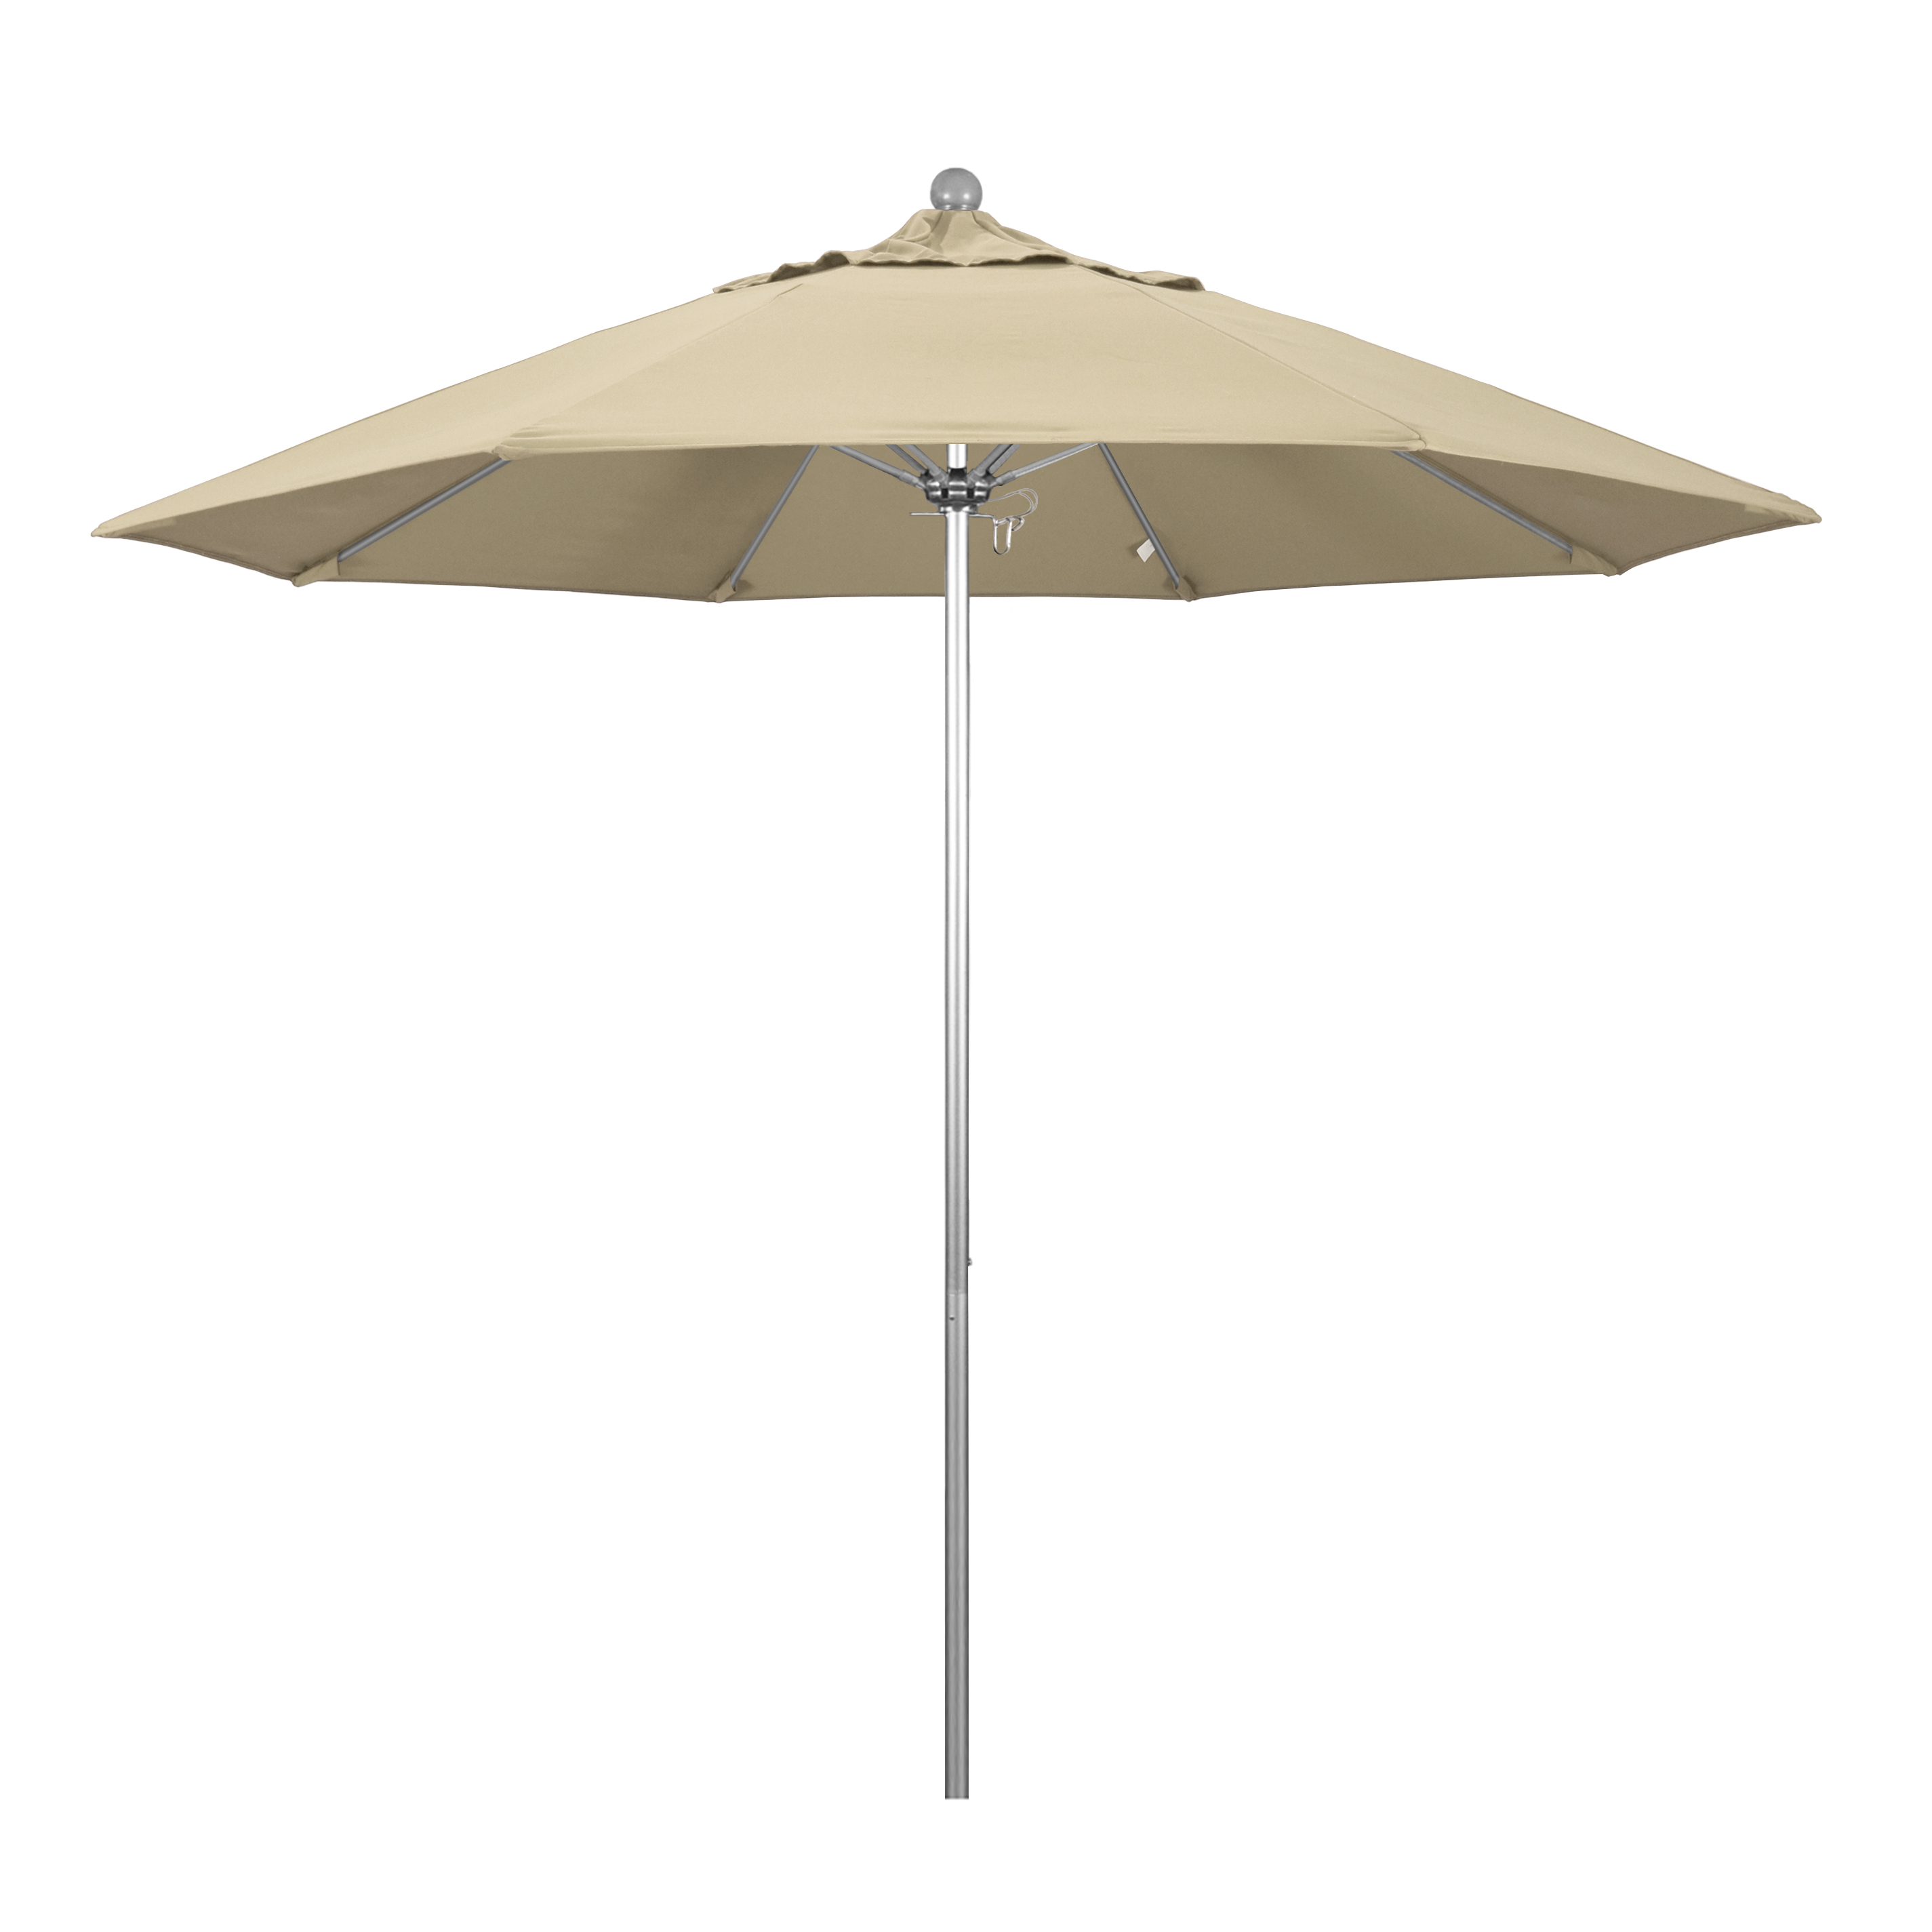 California Umbrella ALTO908002-5422 9 ft. Fiberglass Pulley Open Market Umbrella - Anodized and Sunbrella-Antique Beige